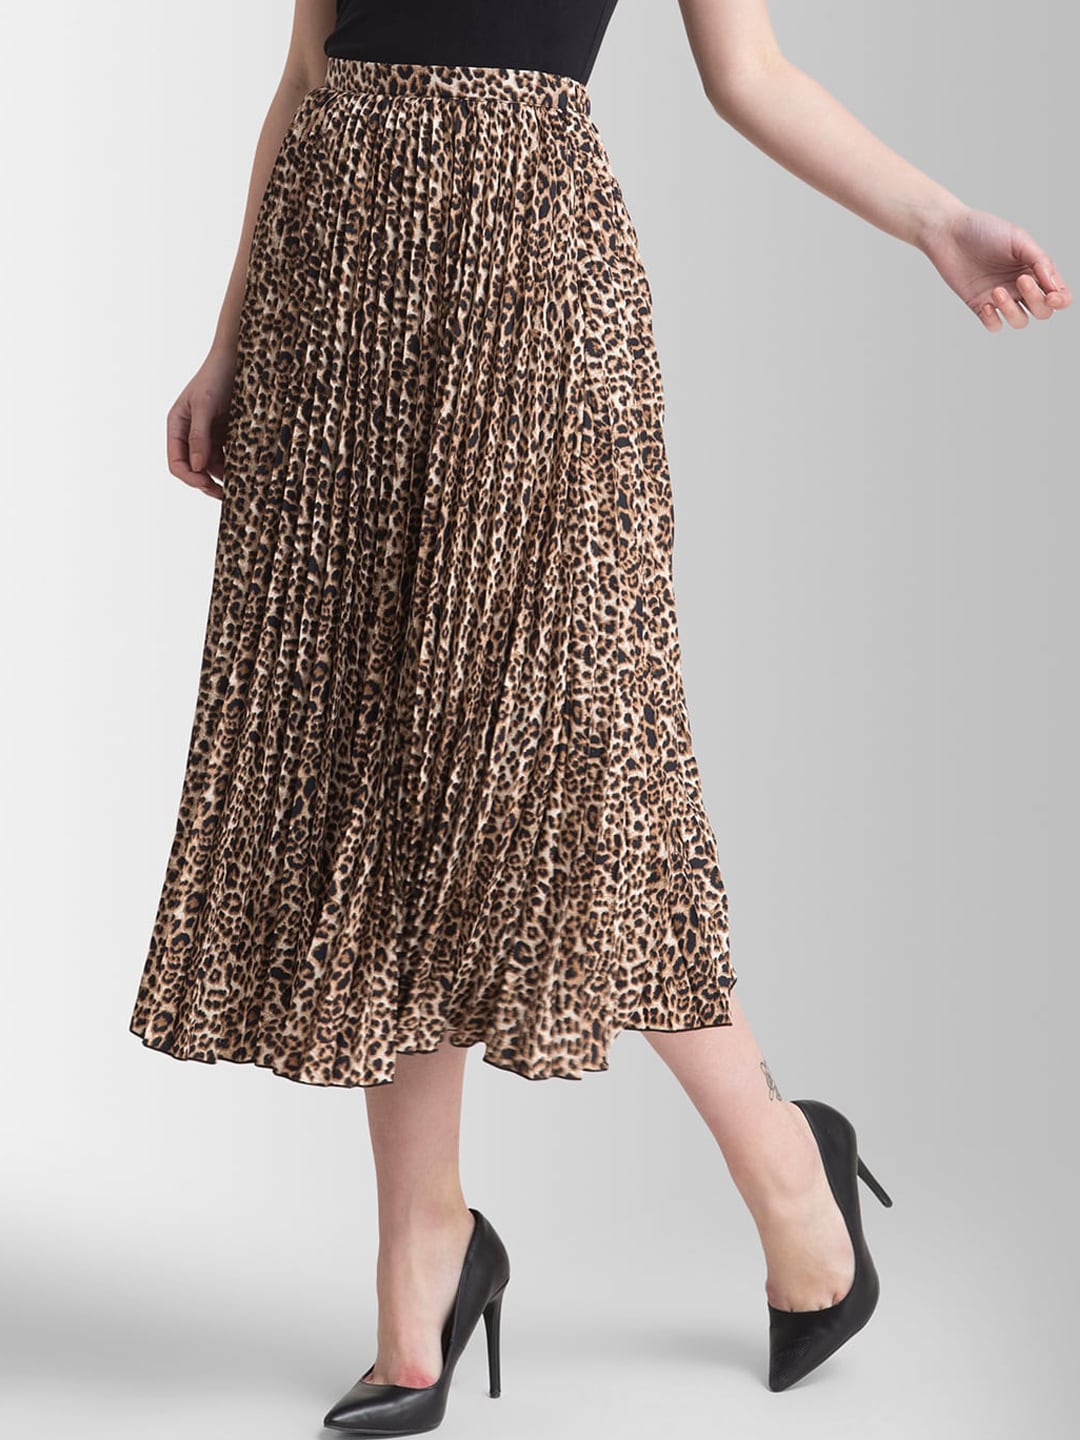 FableStreet Brown & Beige Animal Printed Flared Midi Skirt Price in India